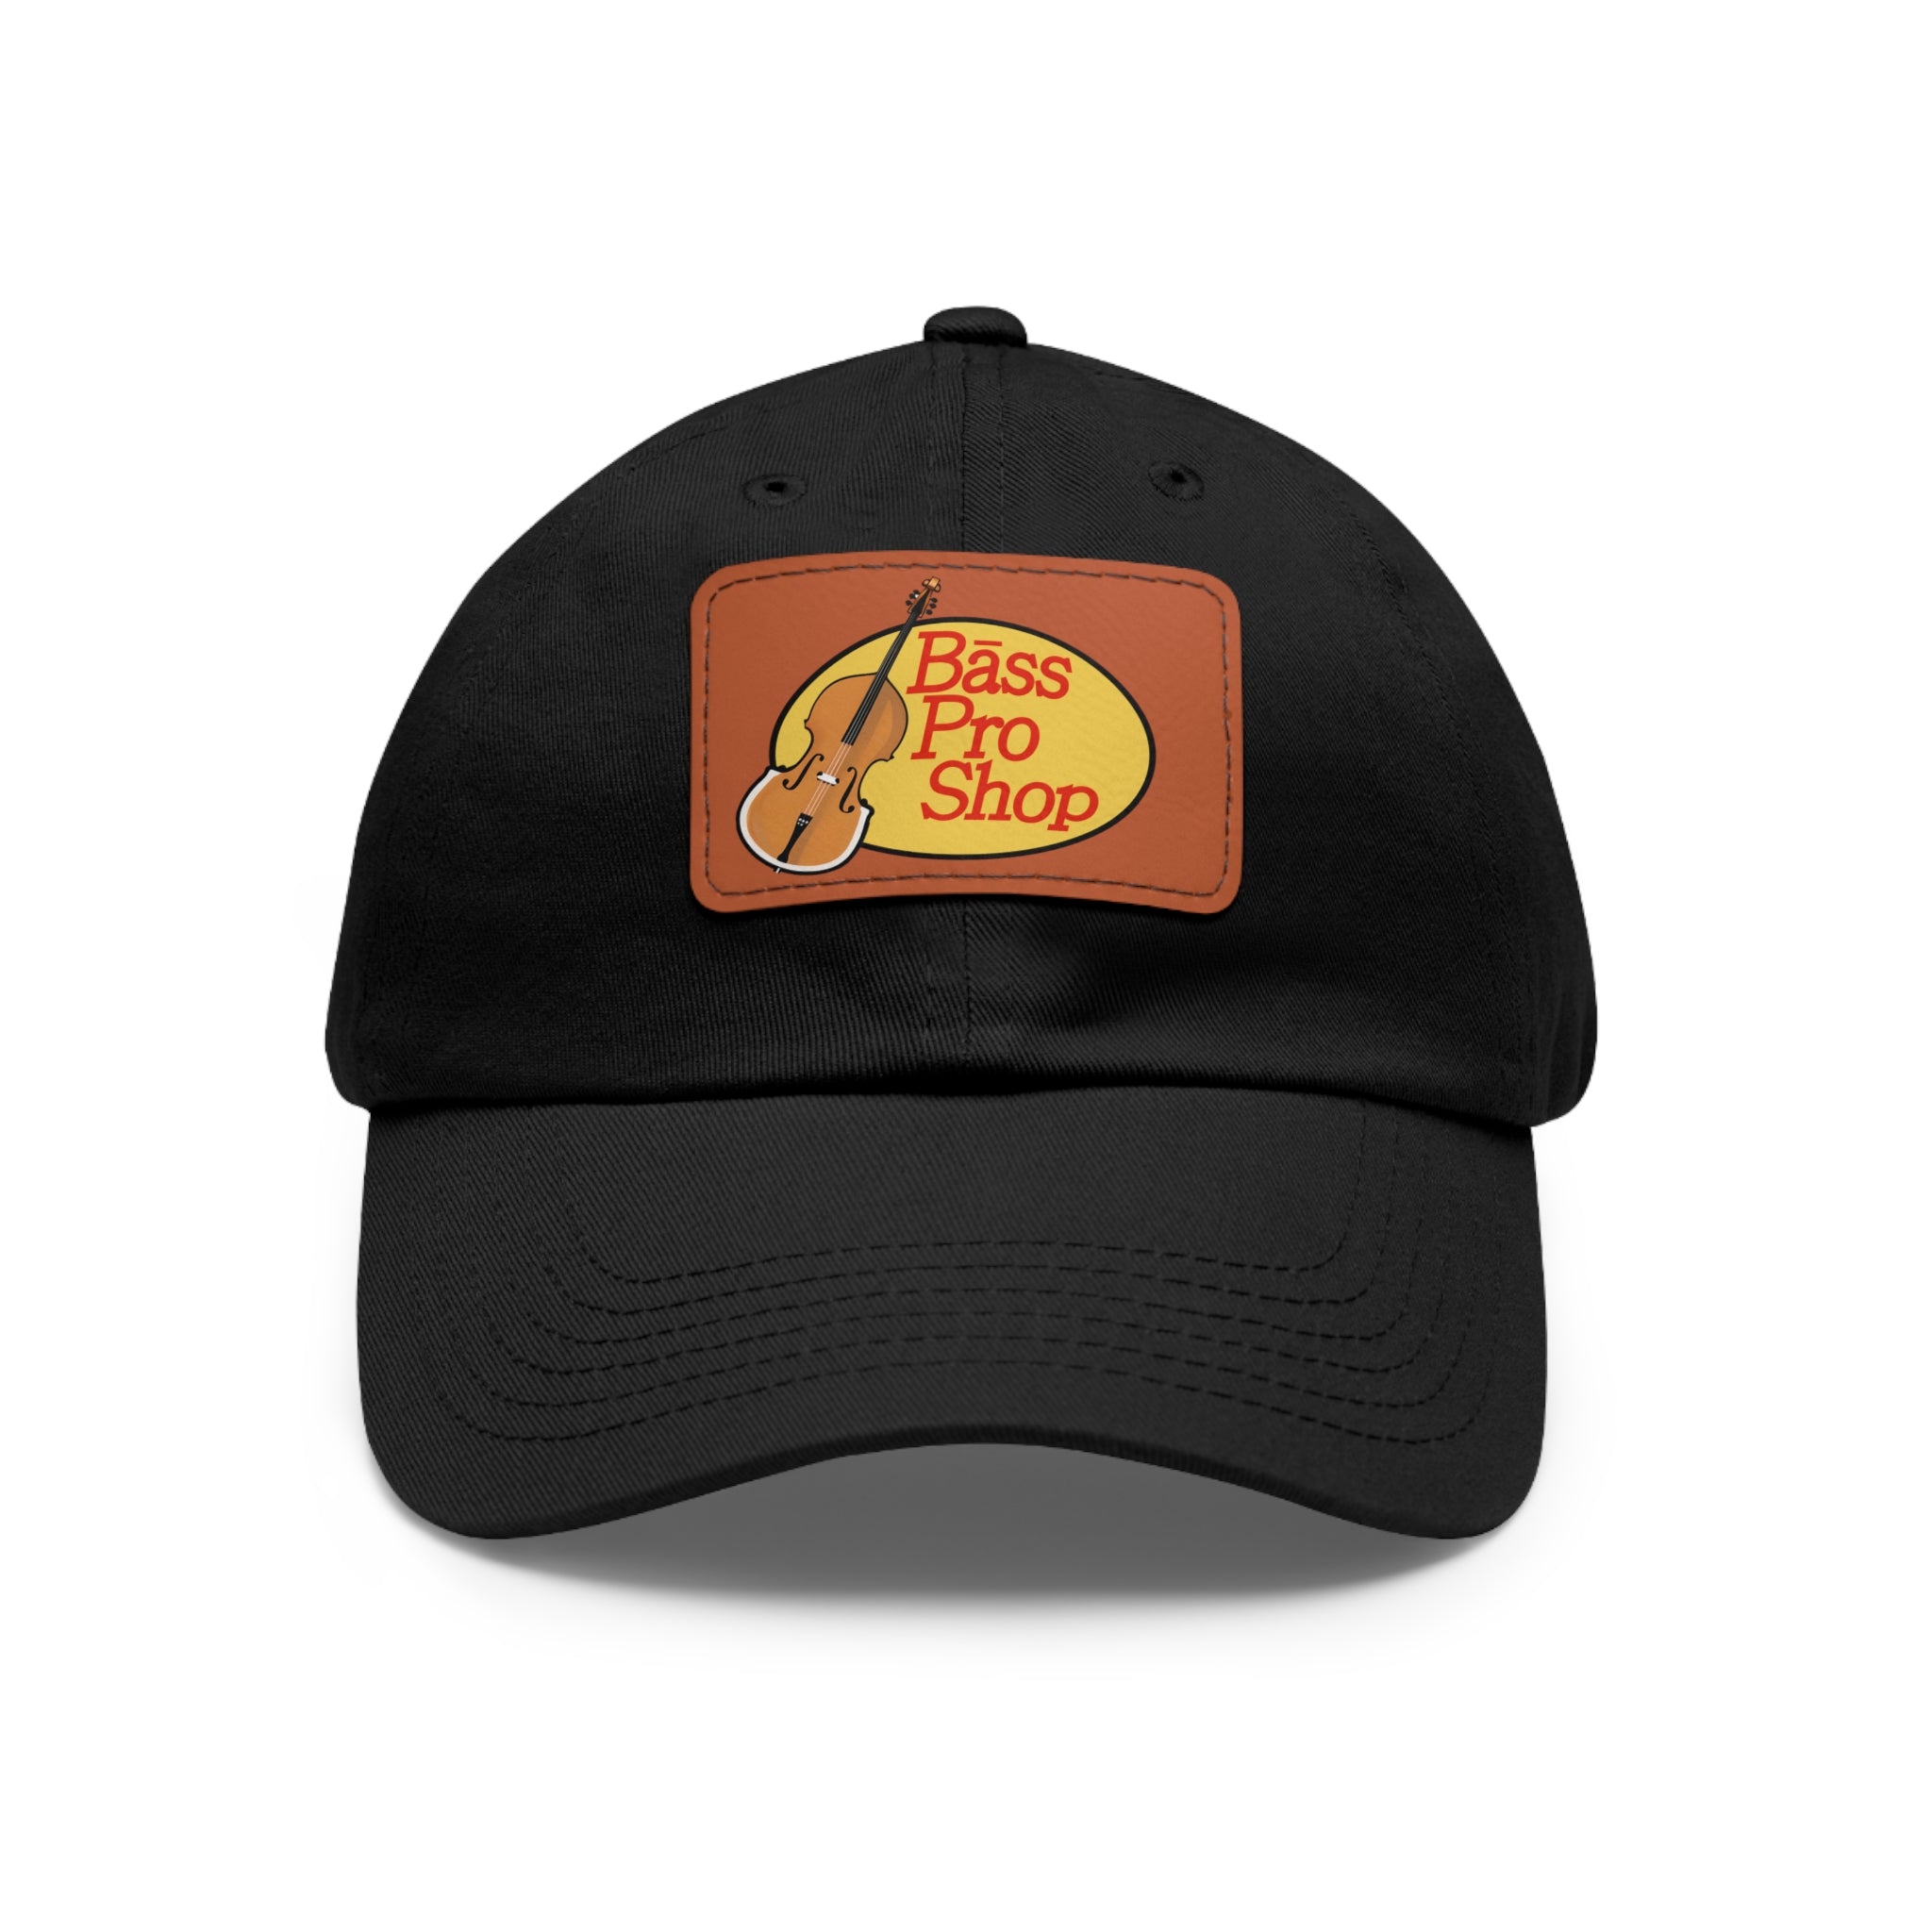 Upright "Bass Pro Shop" Parody Hat Cap for Musicians